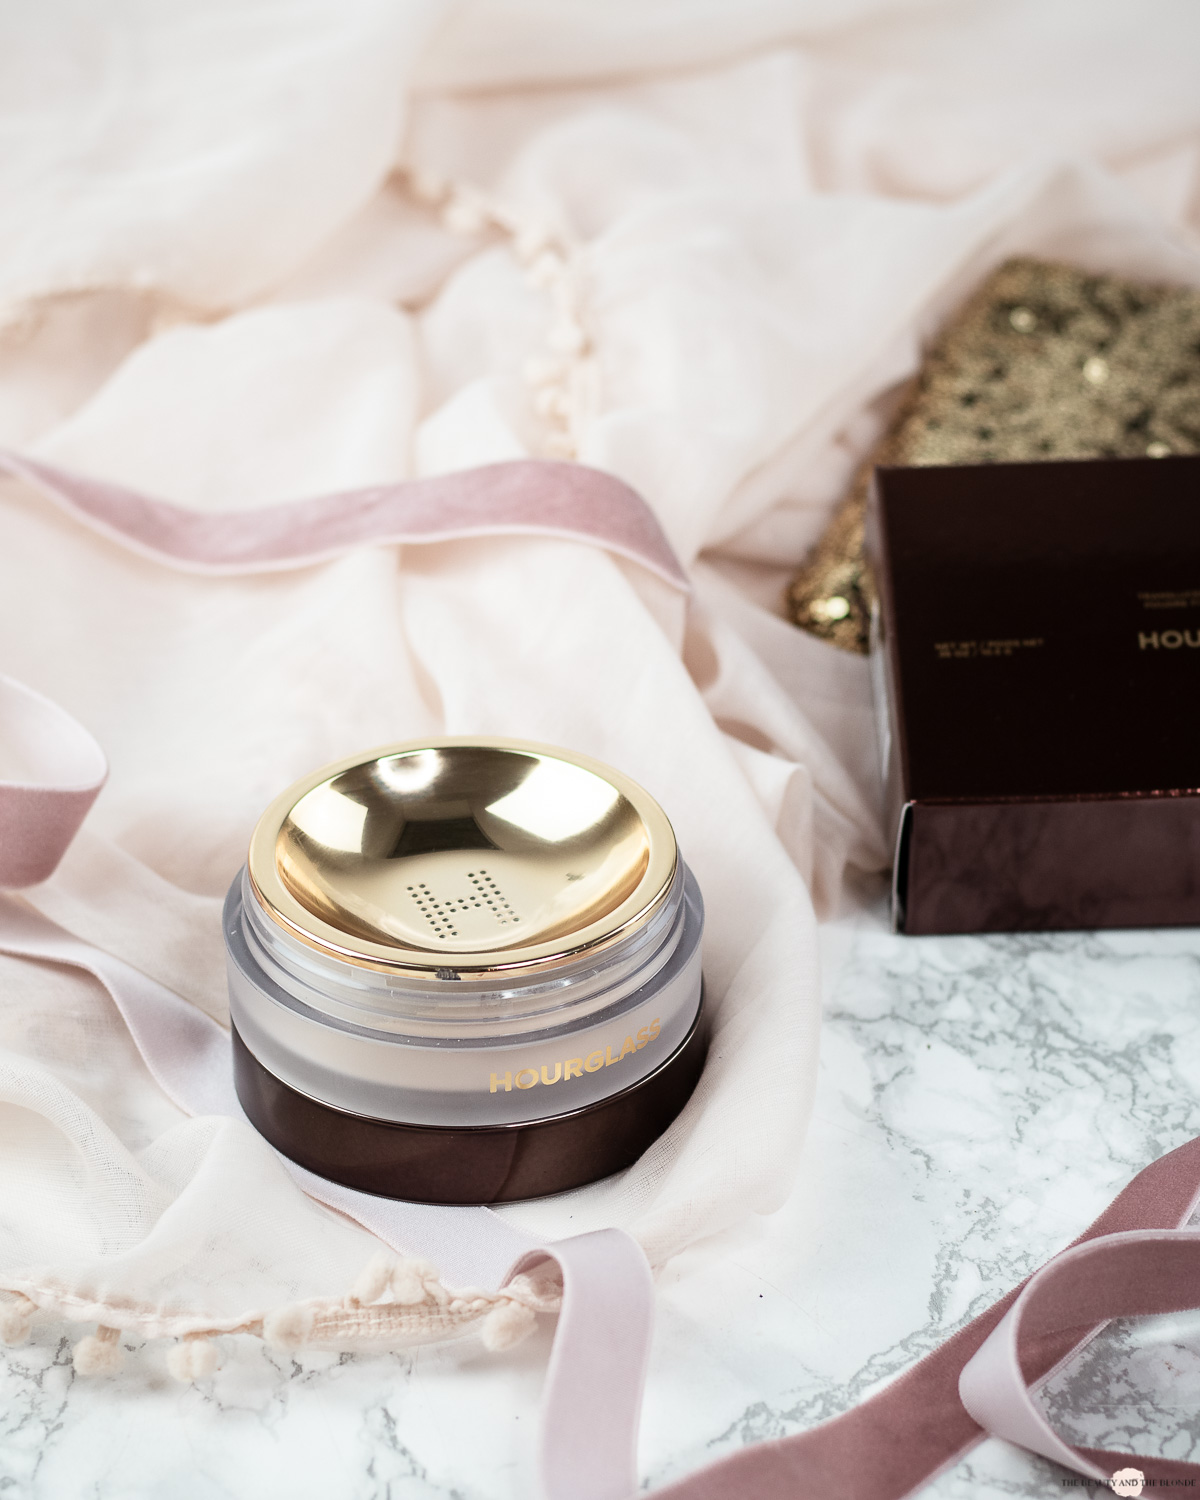 Hourglass Veil Translucent Setting Powder Puder Review Highend Makeup Packaging